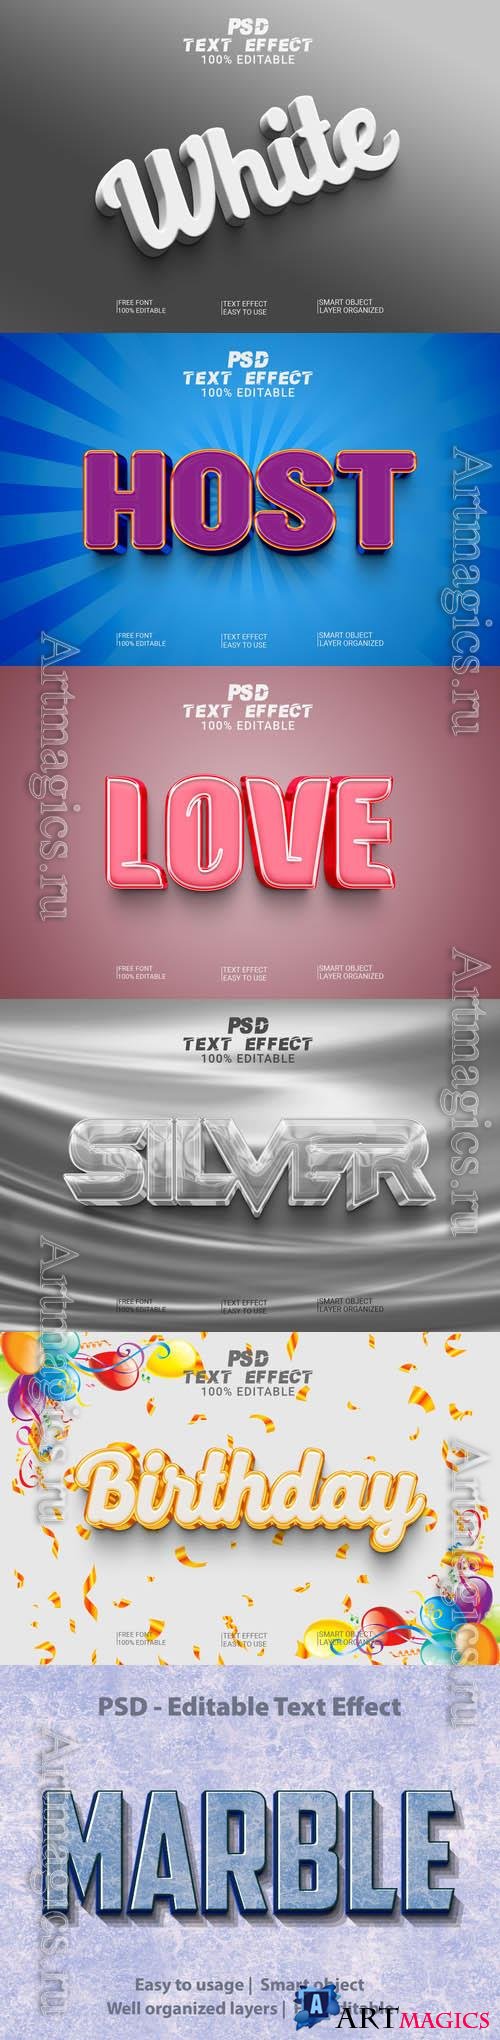 Psd style text effect editable set vol 441